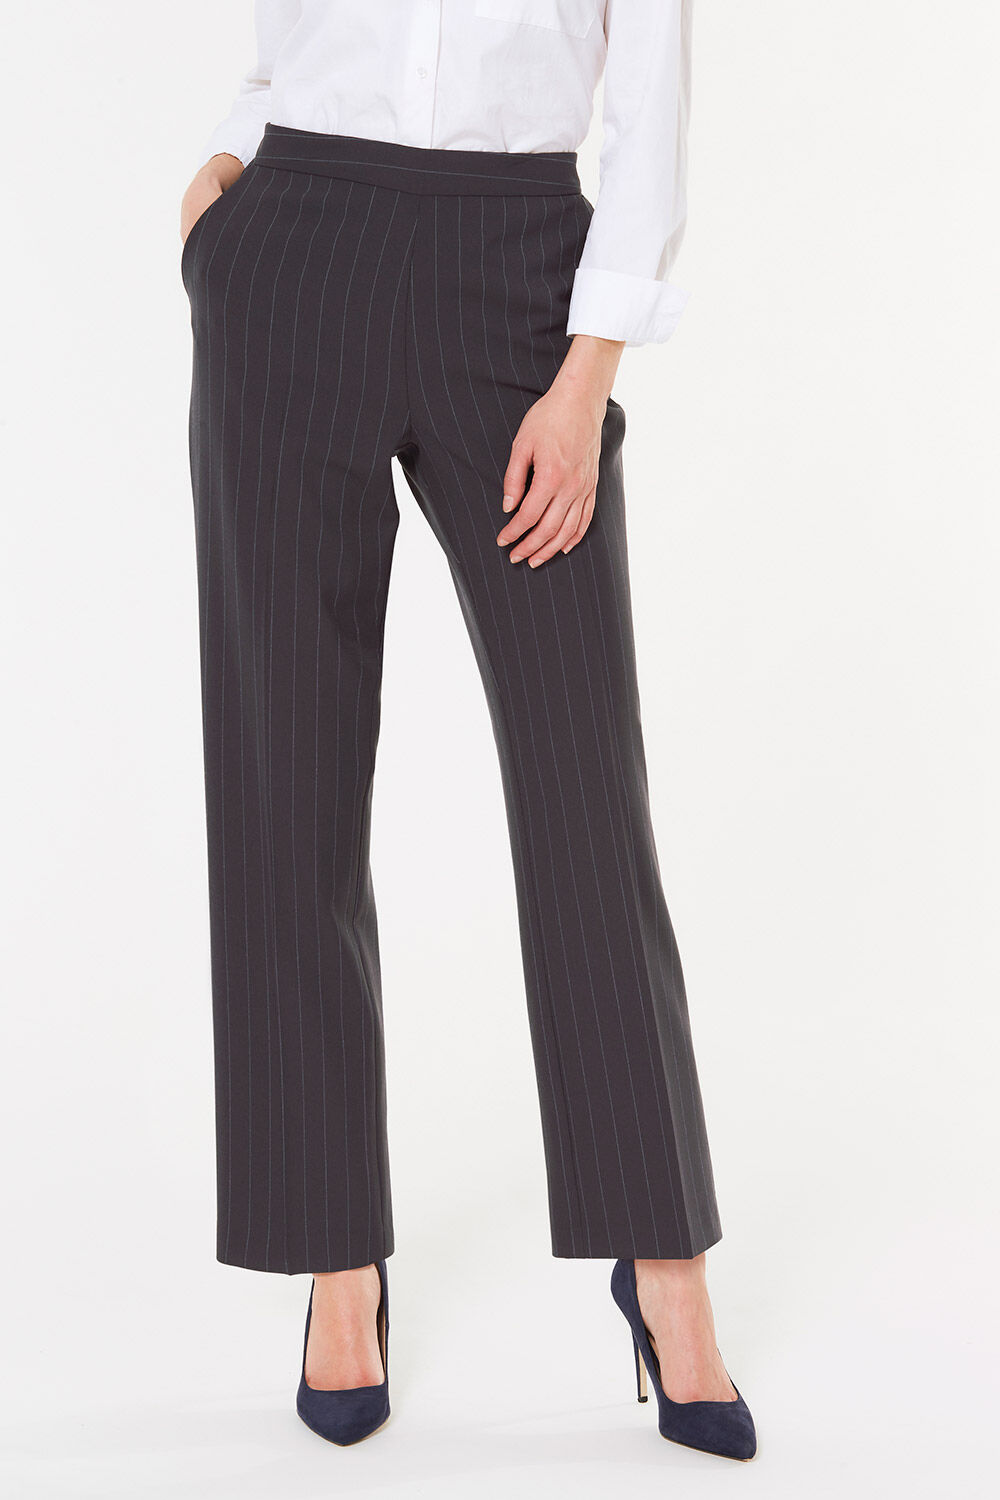 Bonmarche Workwear Straight Leg Stripe Pull On Trouser - Navy, Size: 28